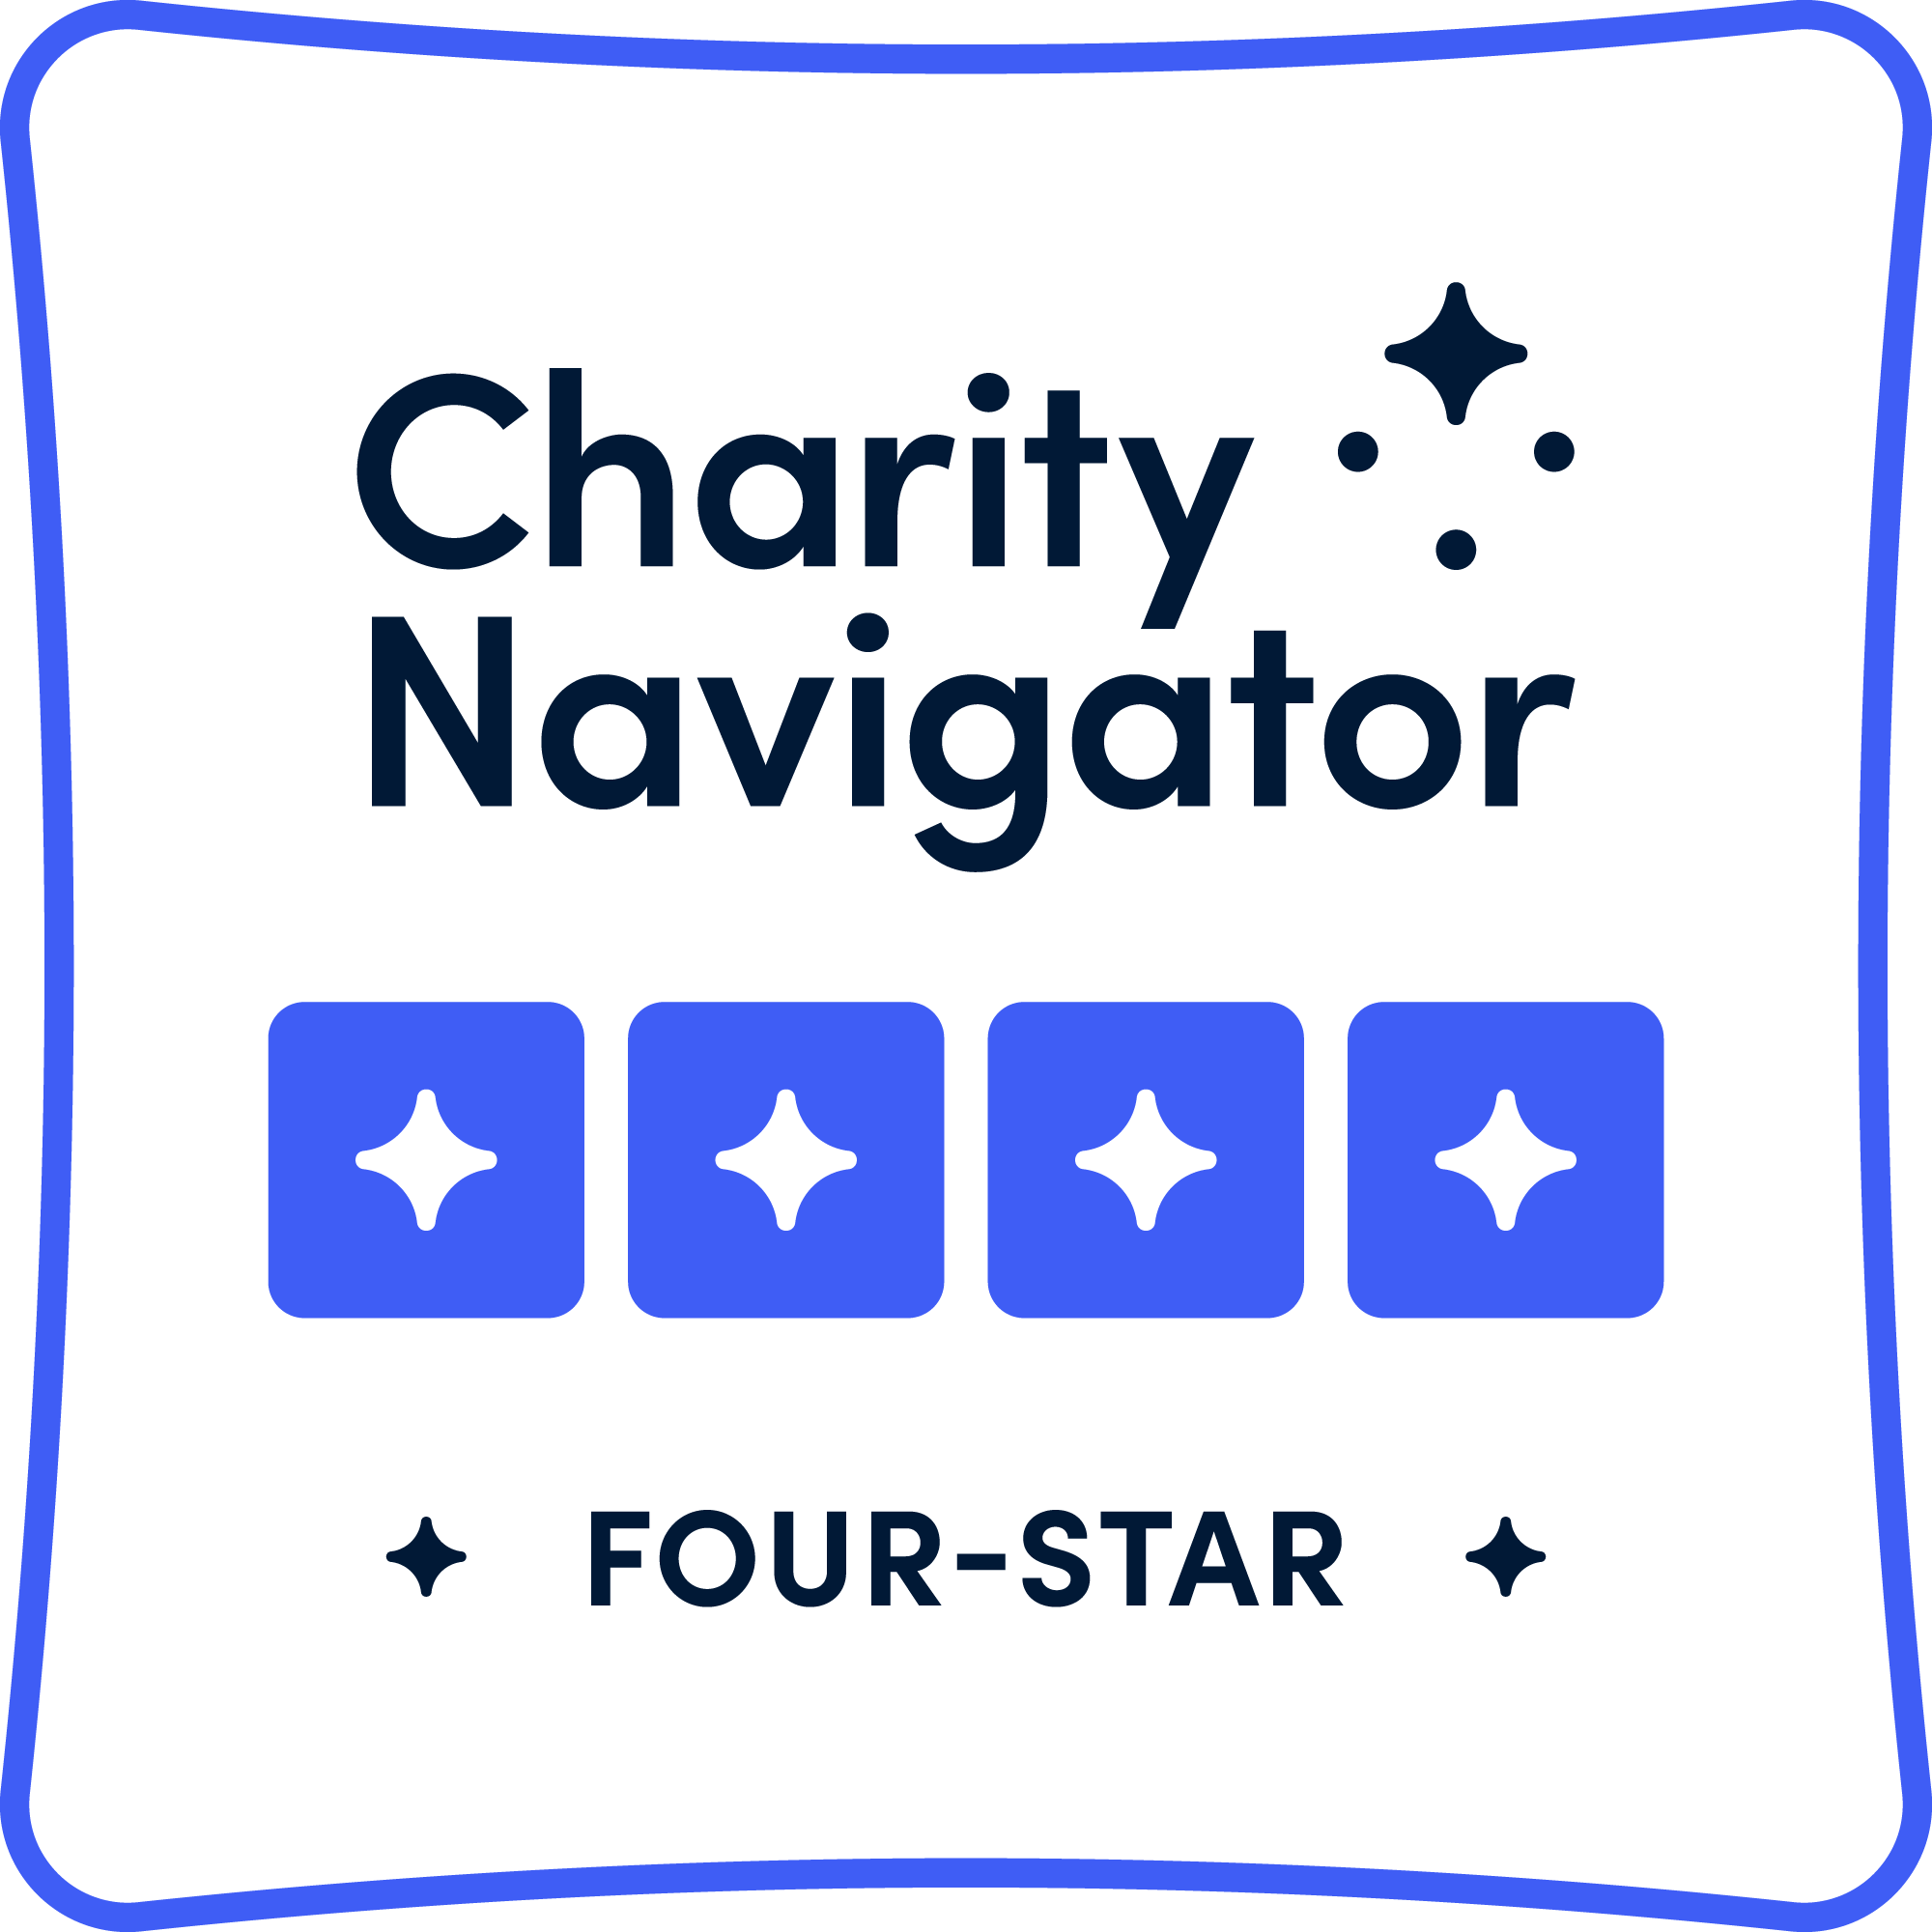 http://Charity%20Navigator%20Four-Star%20Rating%20Badge